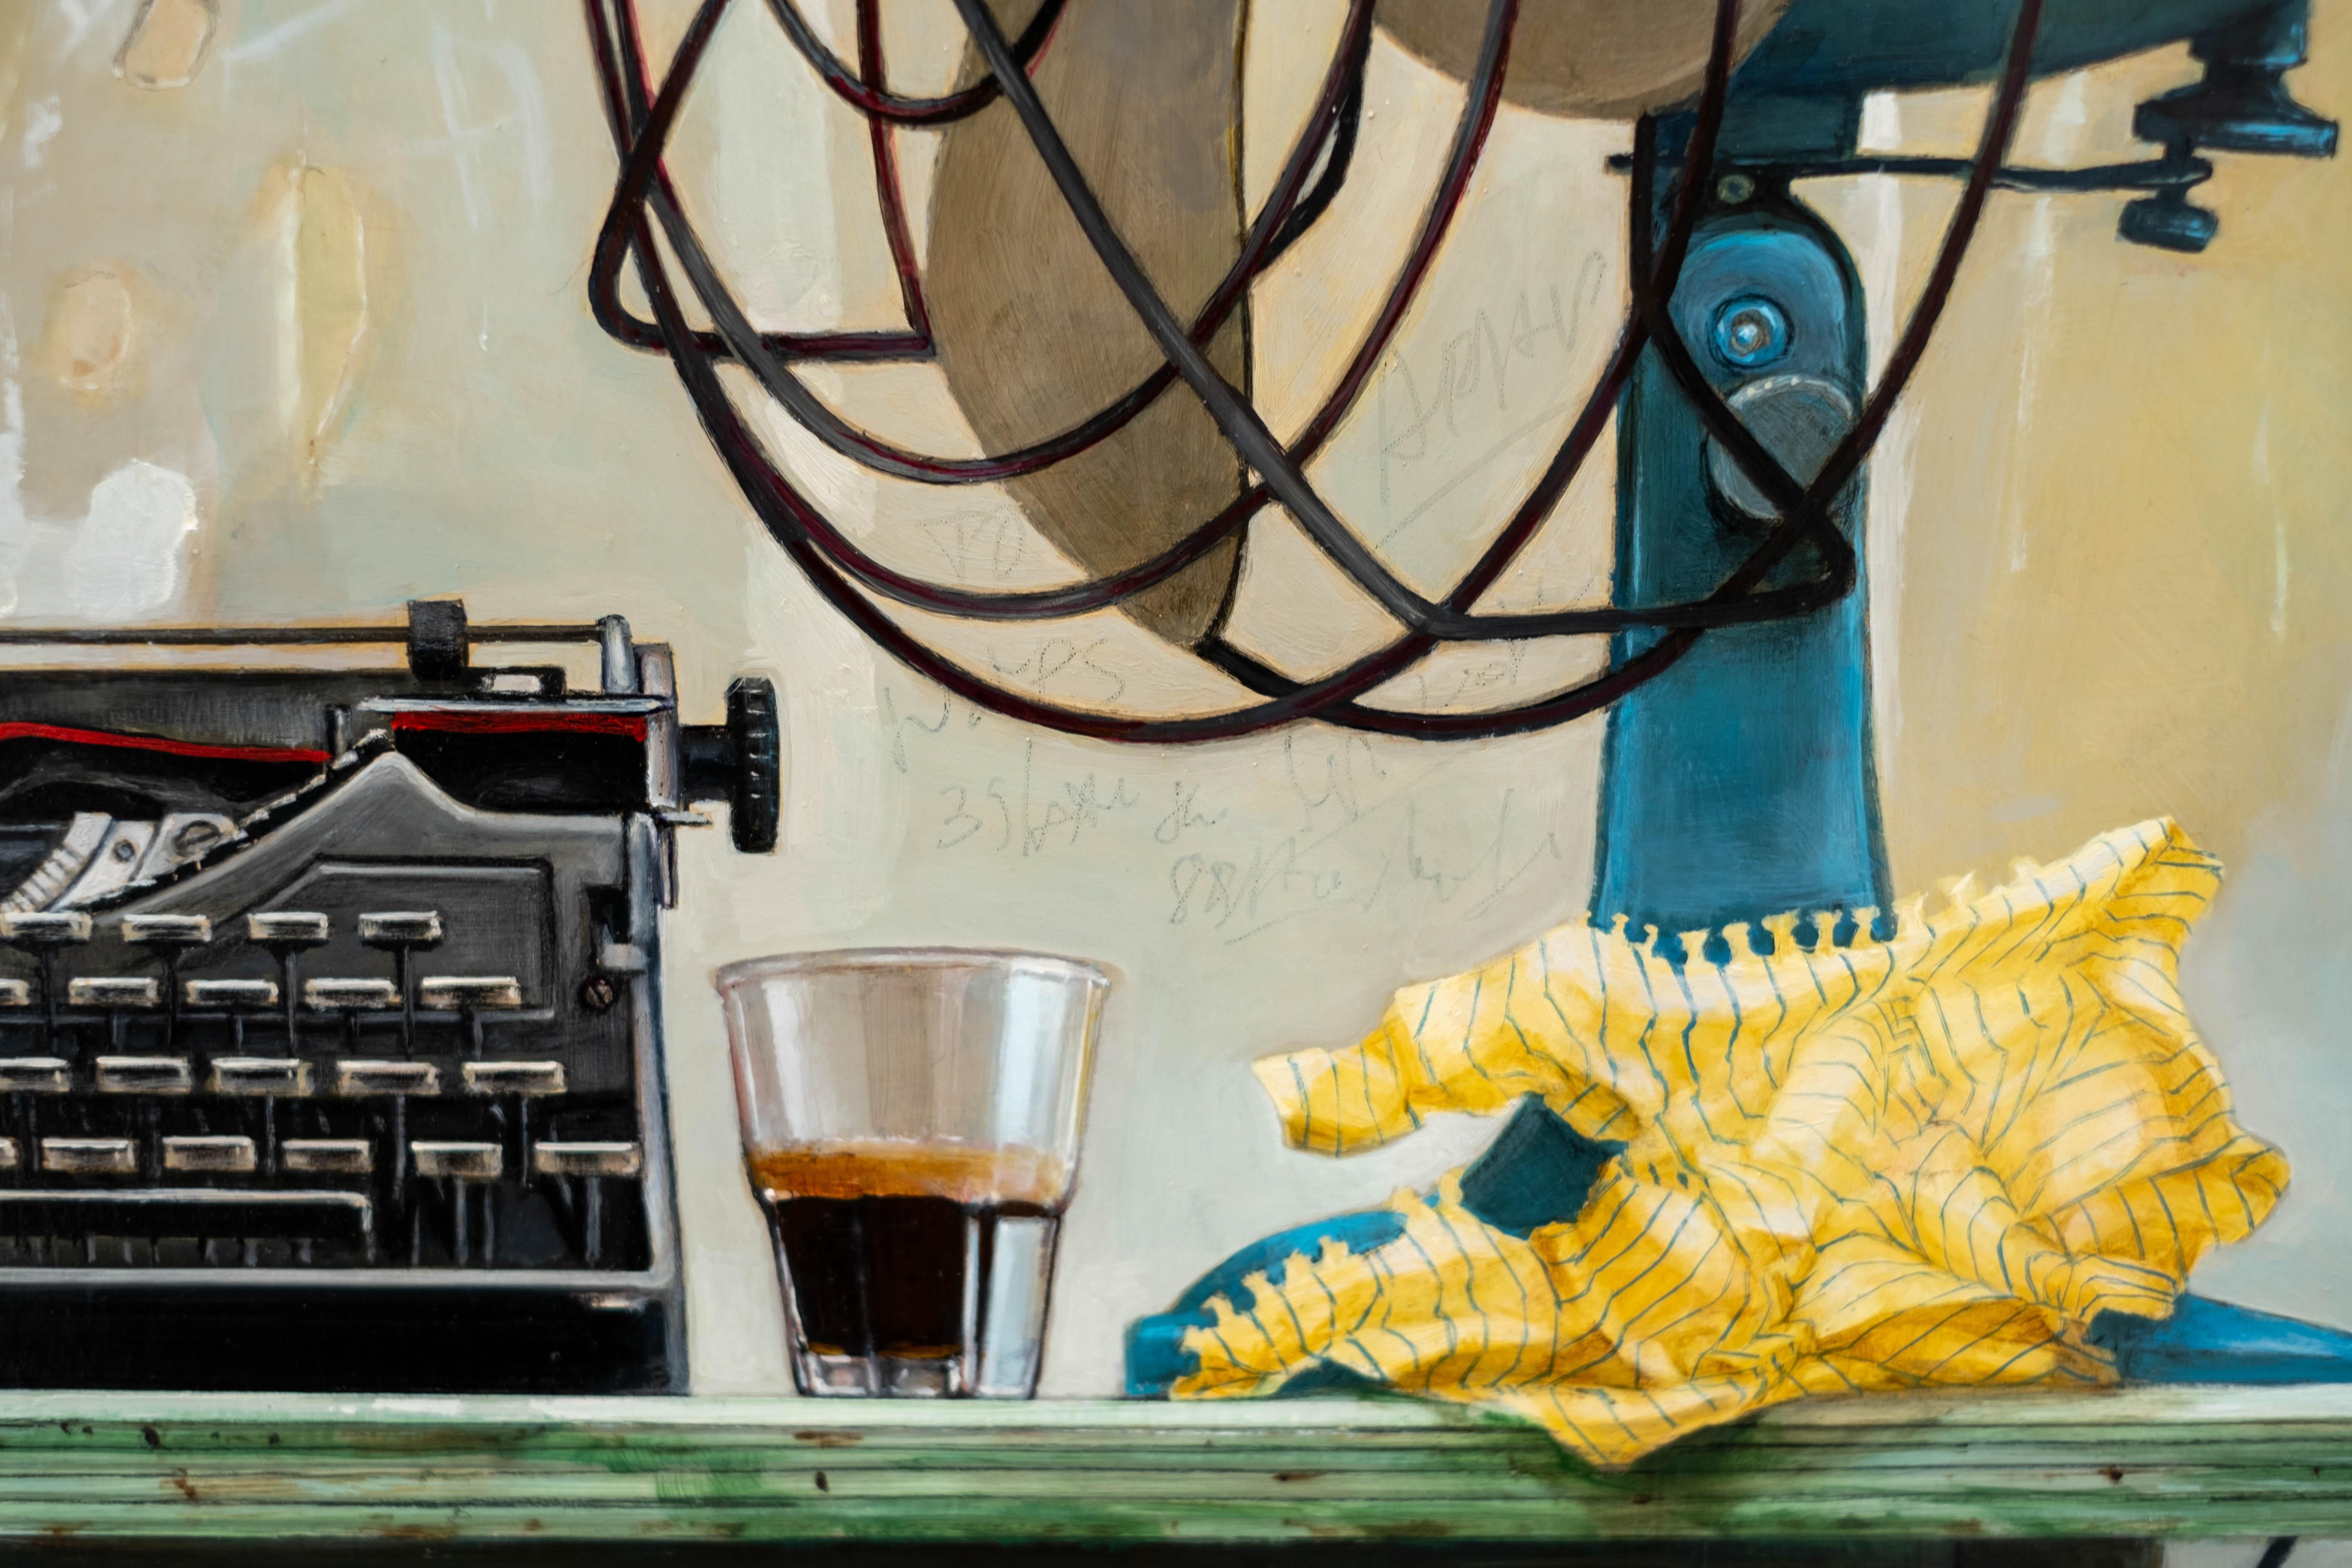 Cup of Coffee and Typewriter - realist, Ukrainian, Israeli, oil on canvas 2